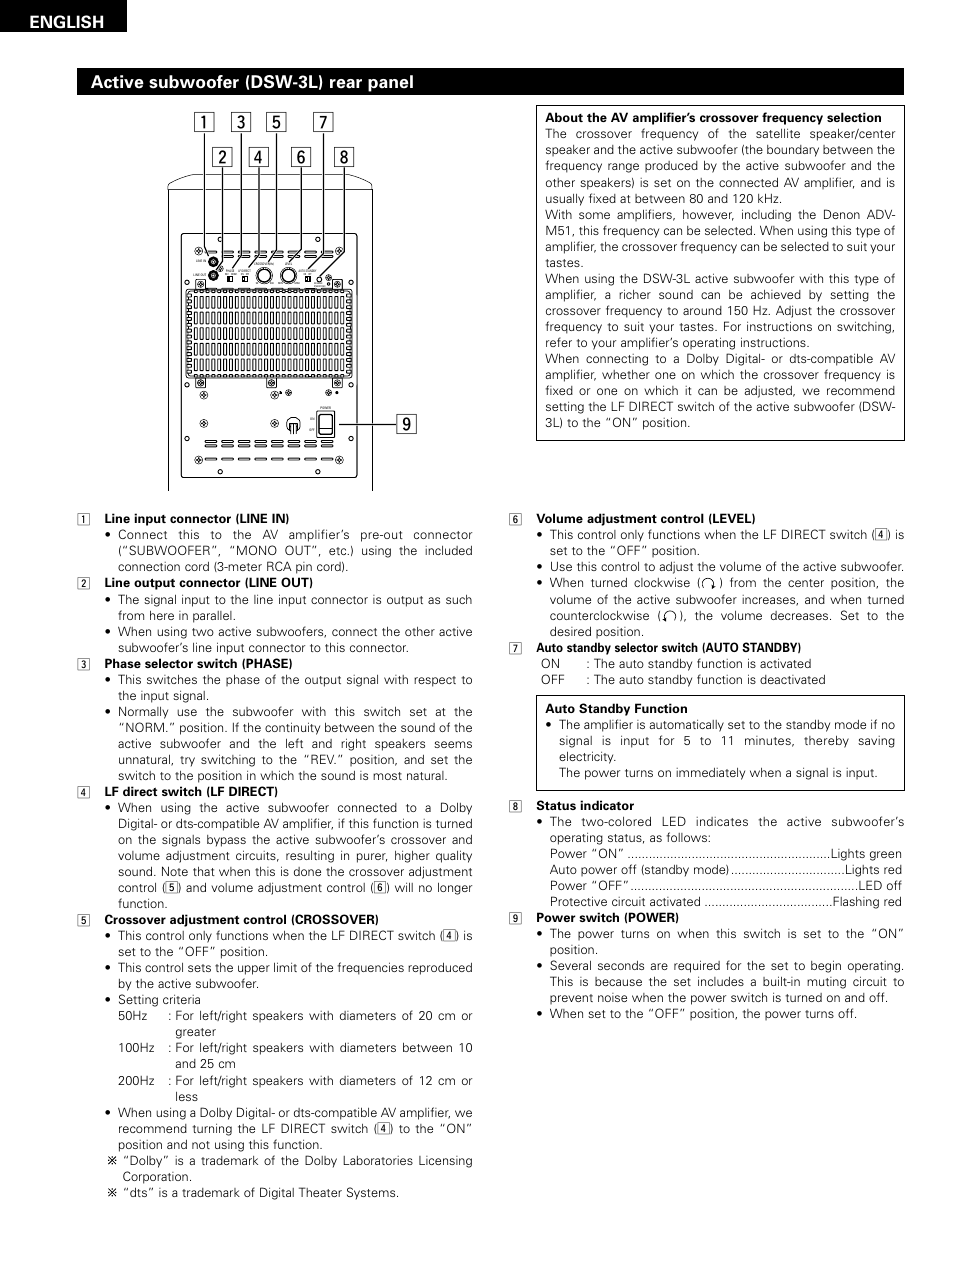 English, Active subwoofer (dsw-3l) rear panel | Denon D-M51DVS User Manual  | Page 22 / 109 | Original mode